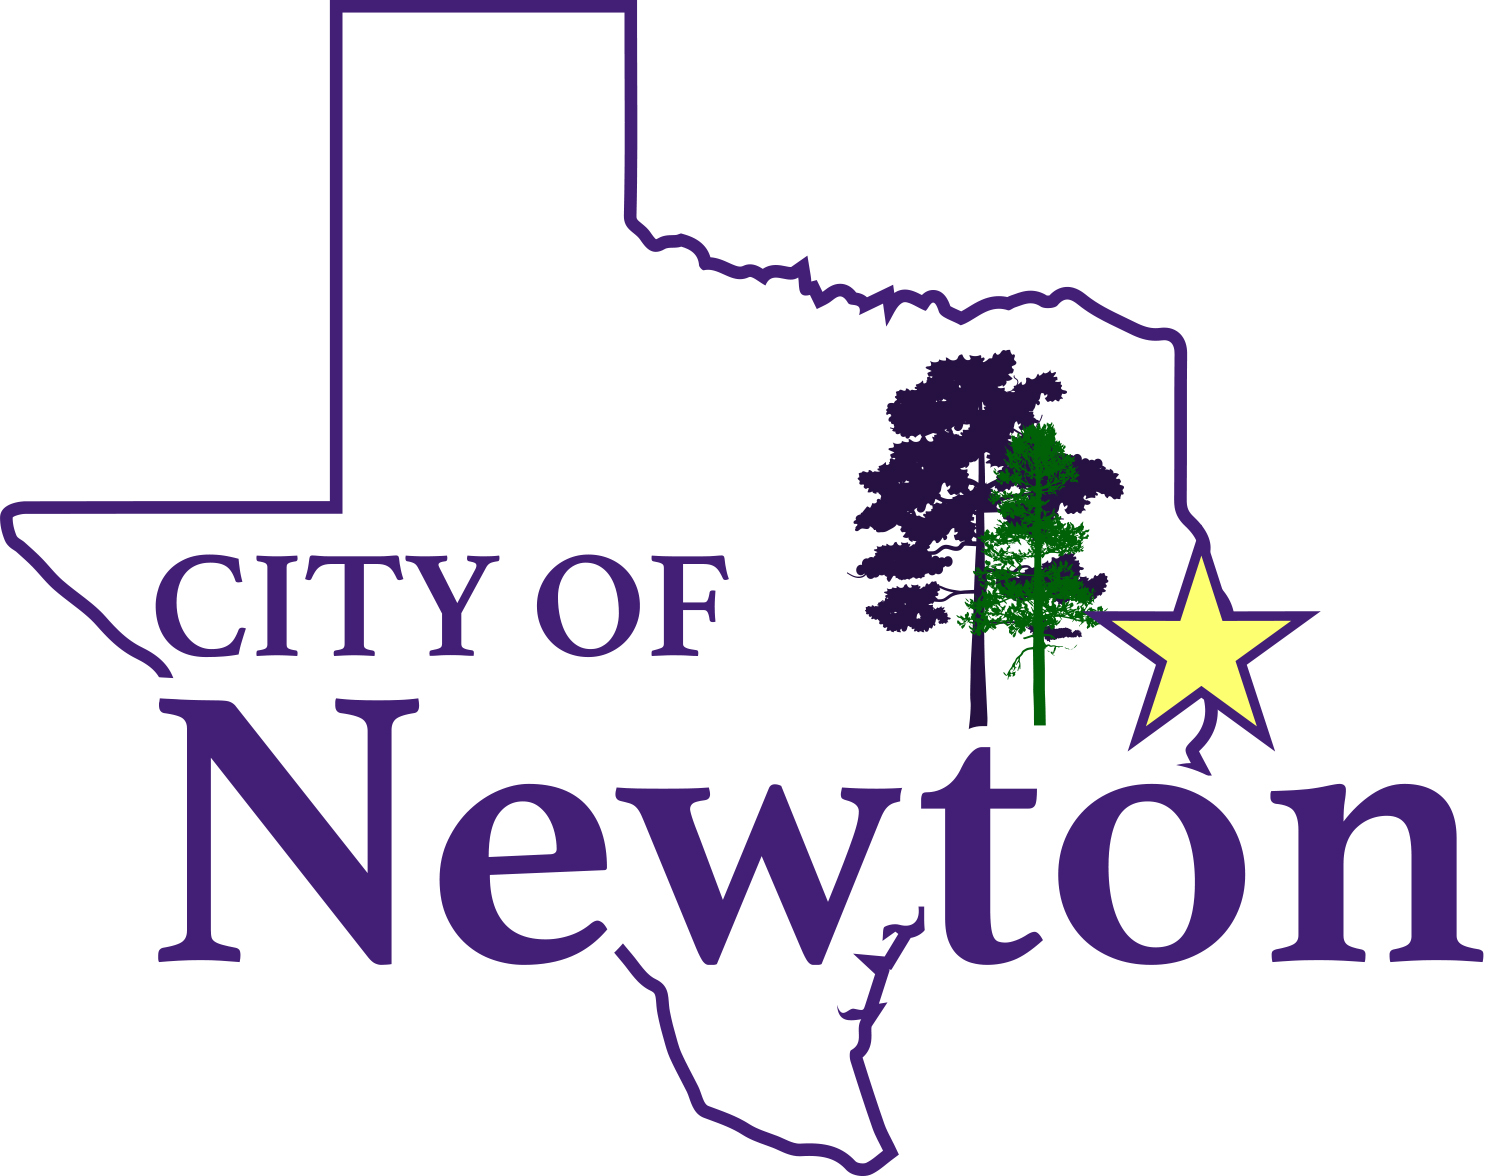 City of Newton logo trees